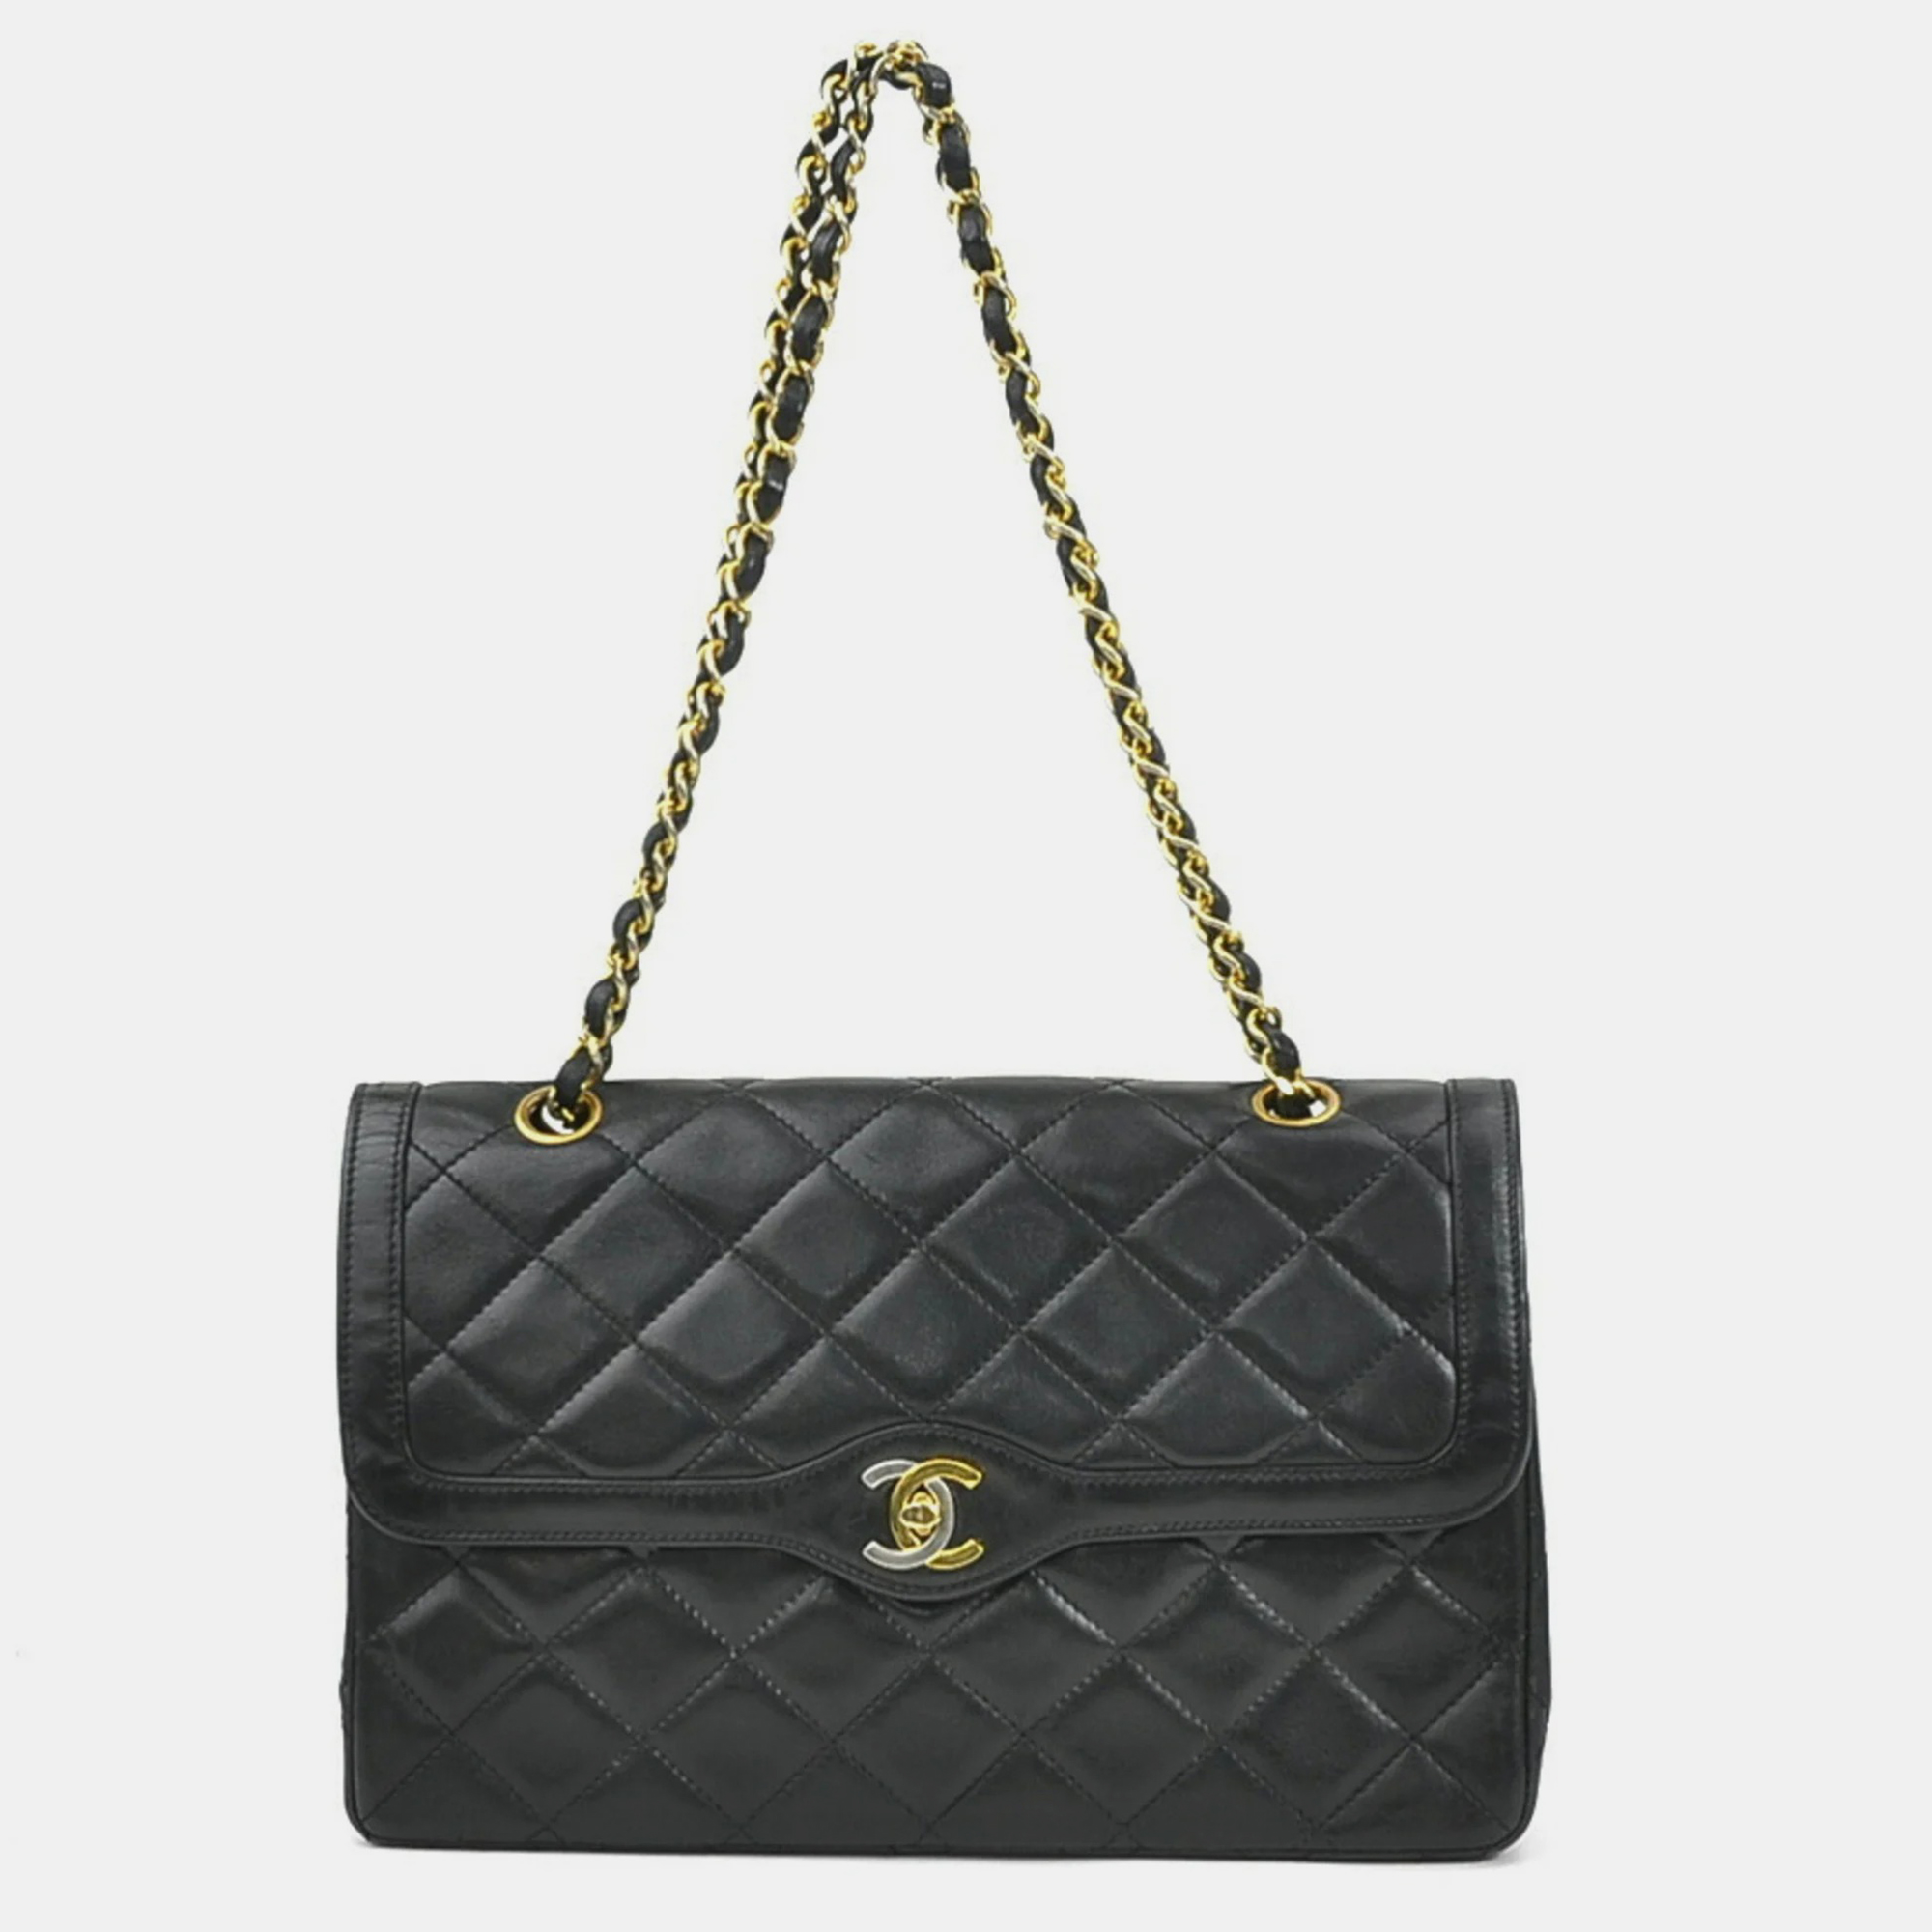 Chanel black quilted leather paris double flap bag